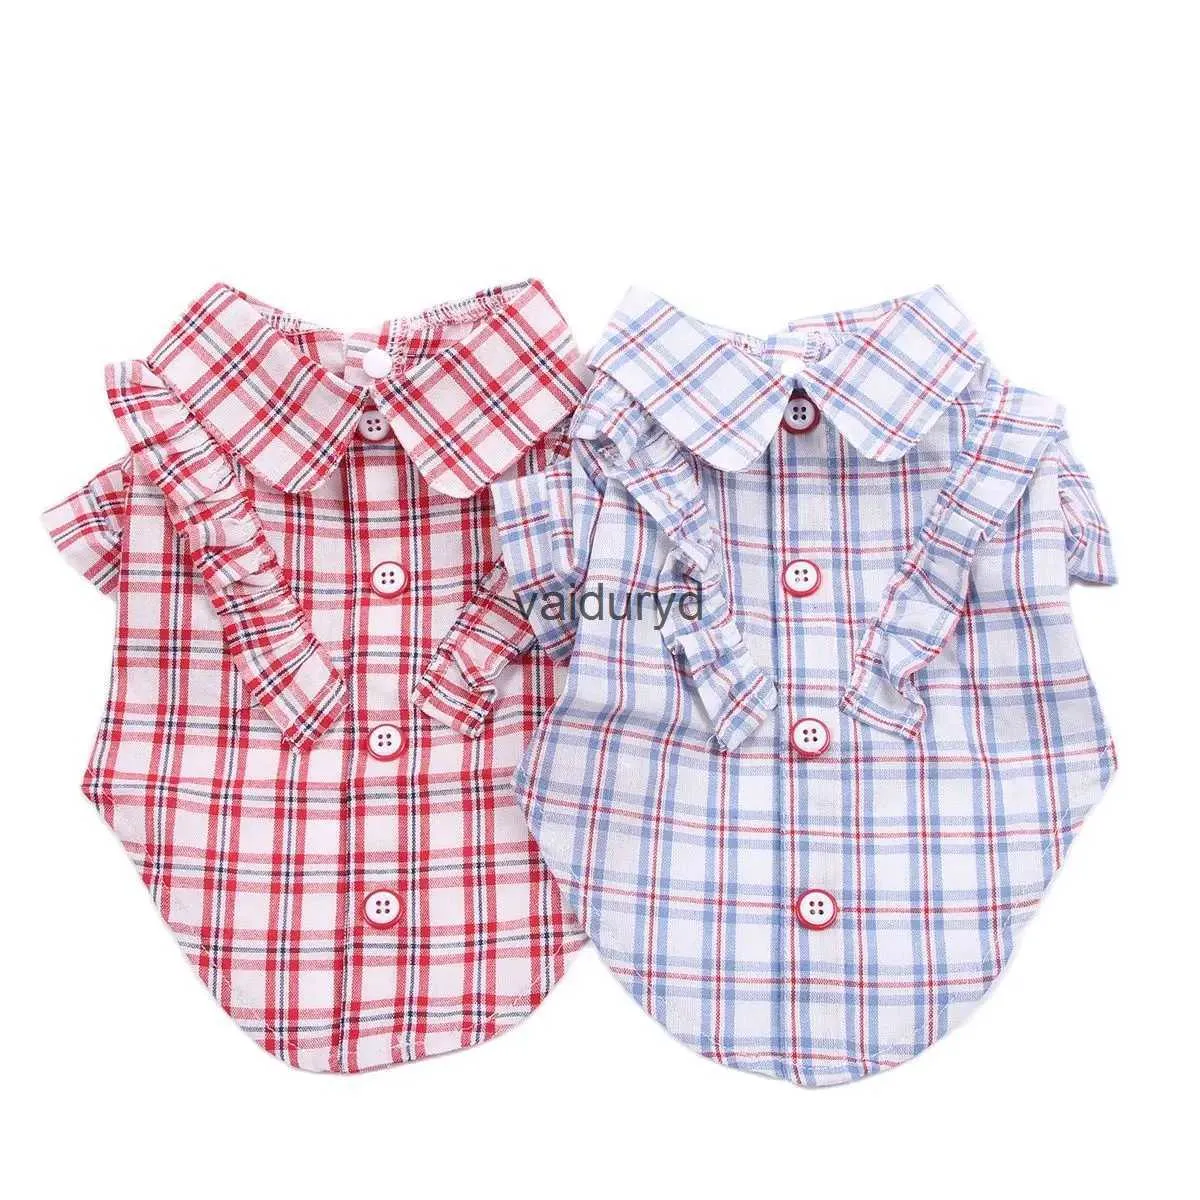 Dog Apparel Cat Shirt Dress Plaid Lace DesignFemale Pet Puppy Shirts Spring/Summer Clothingvaiduryd